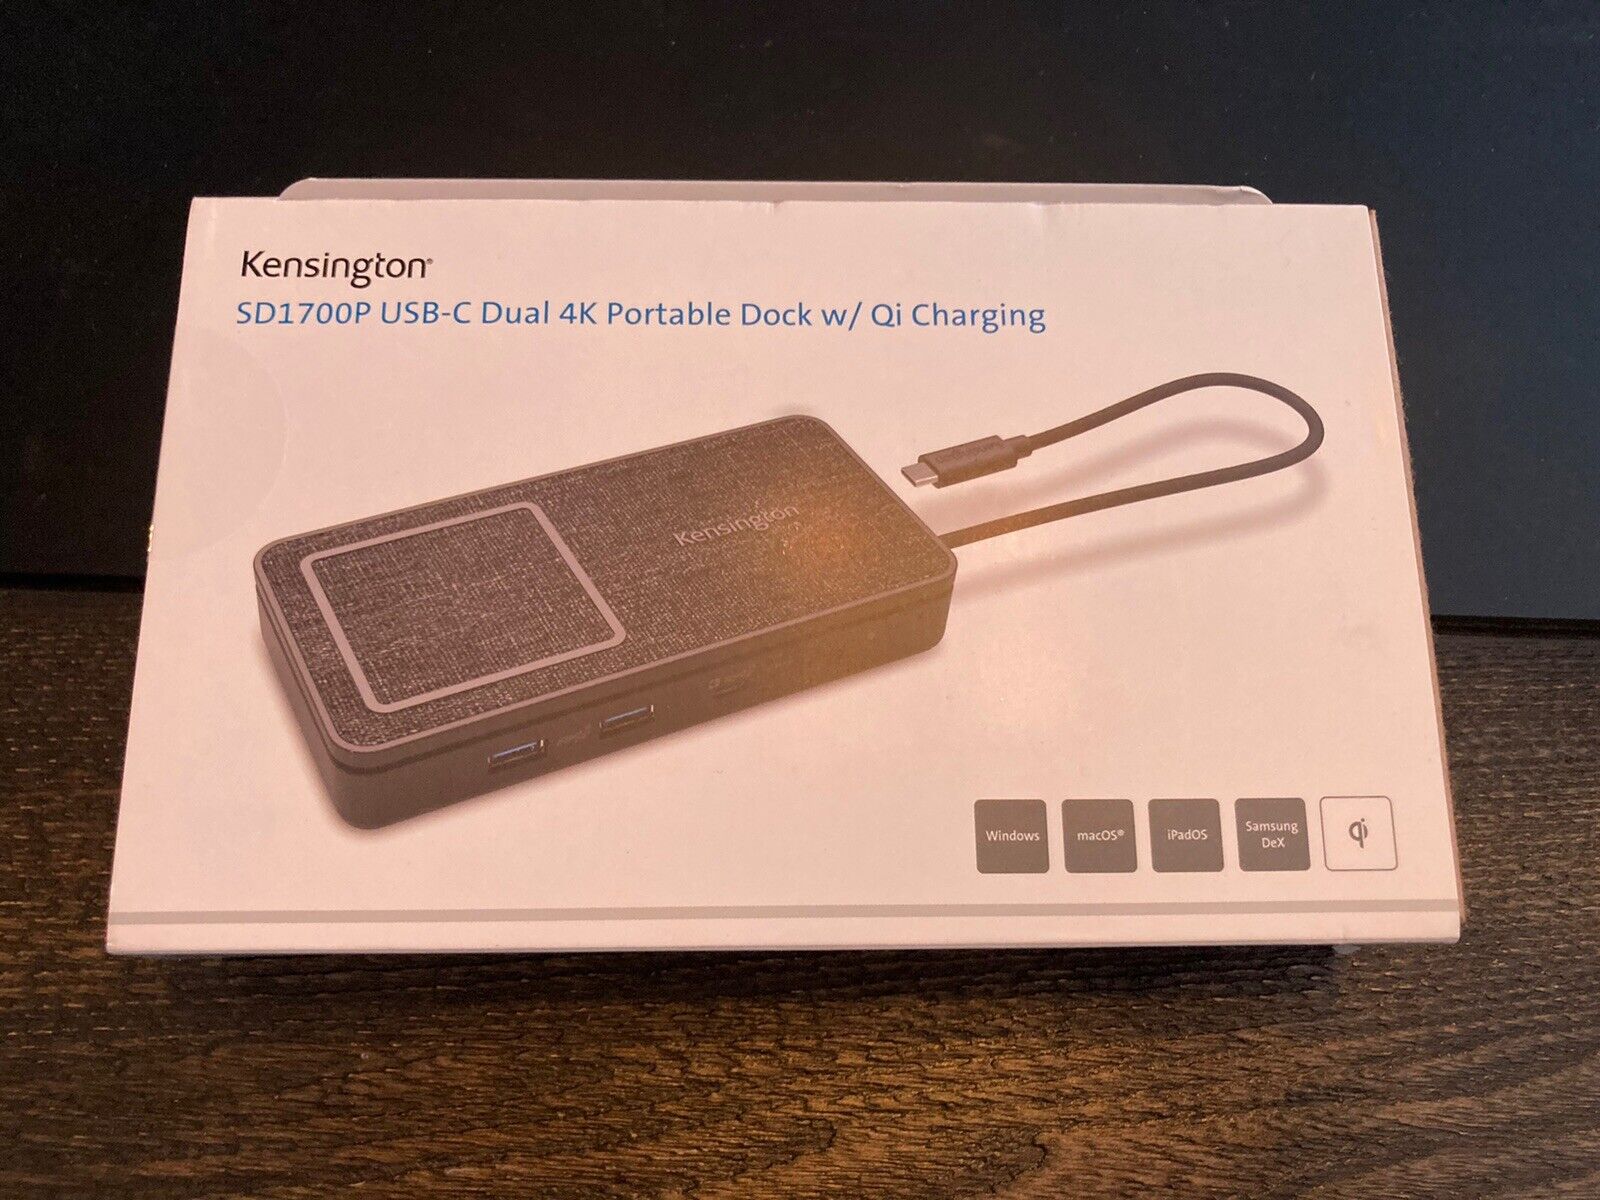 Kensington SD1700P USB-C Dual 4K Portable Dock w/ Qi Charging